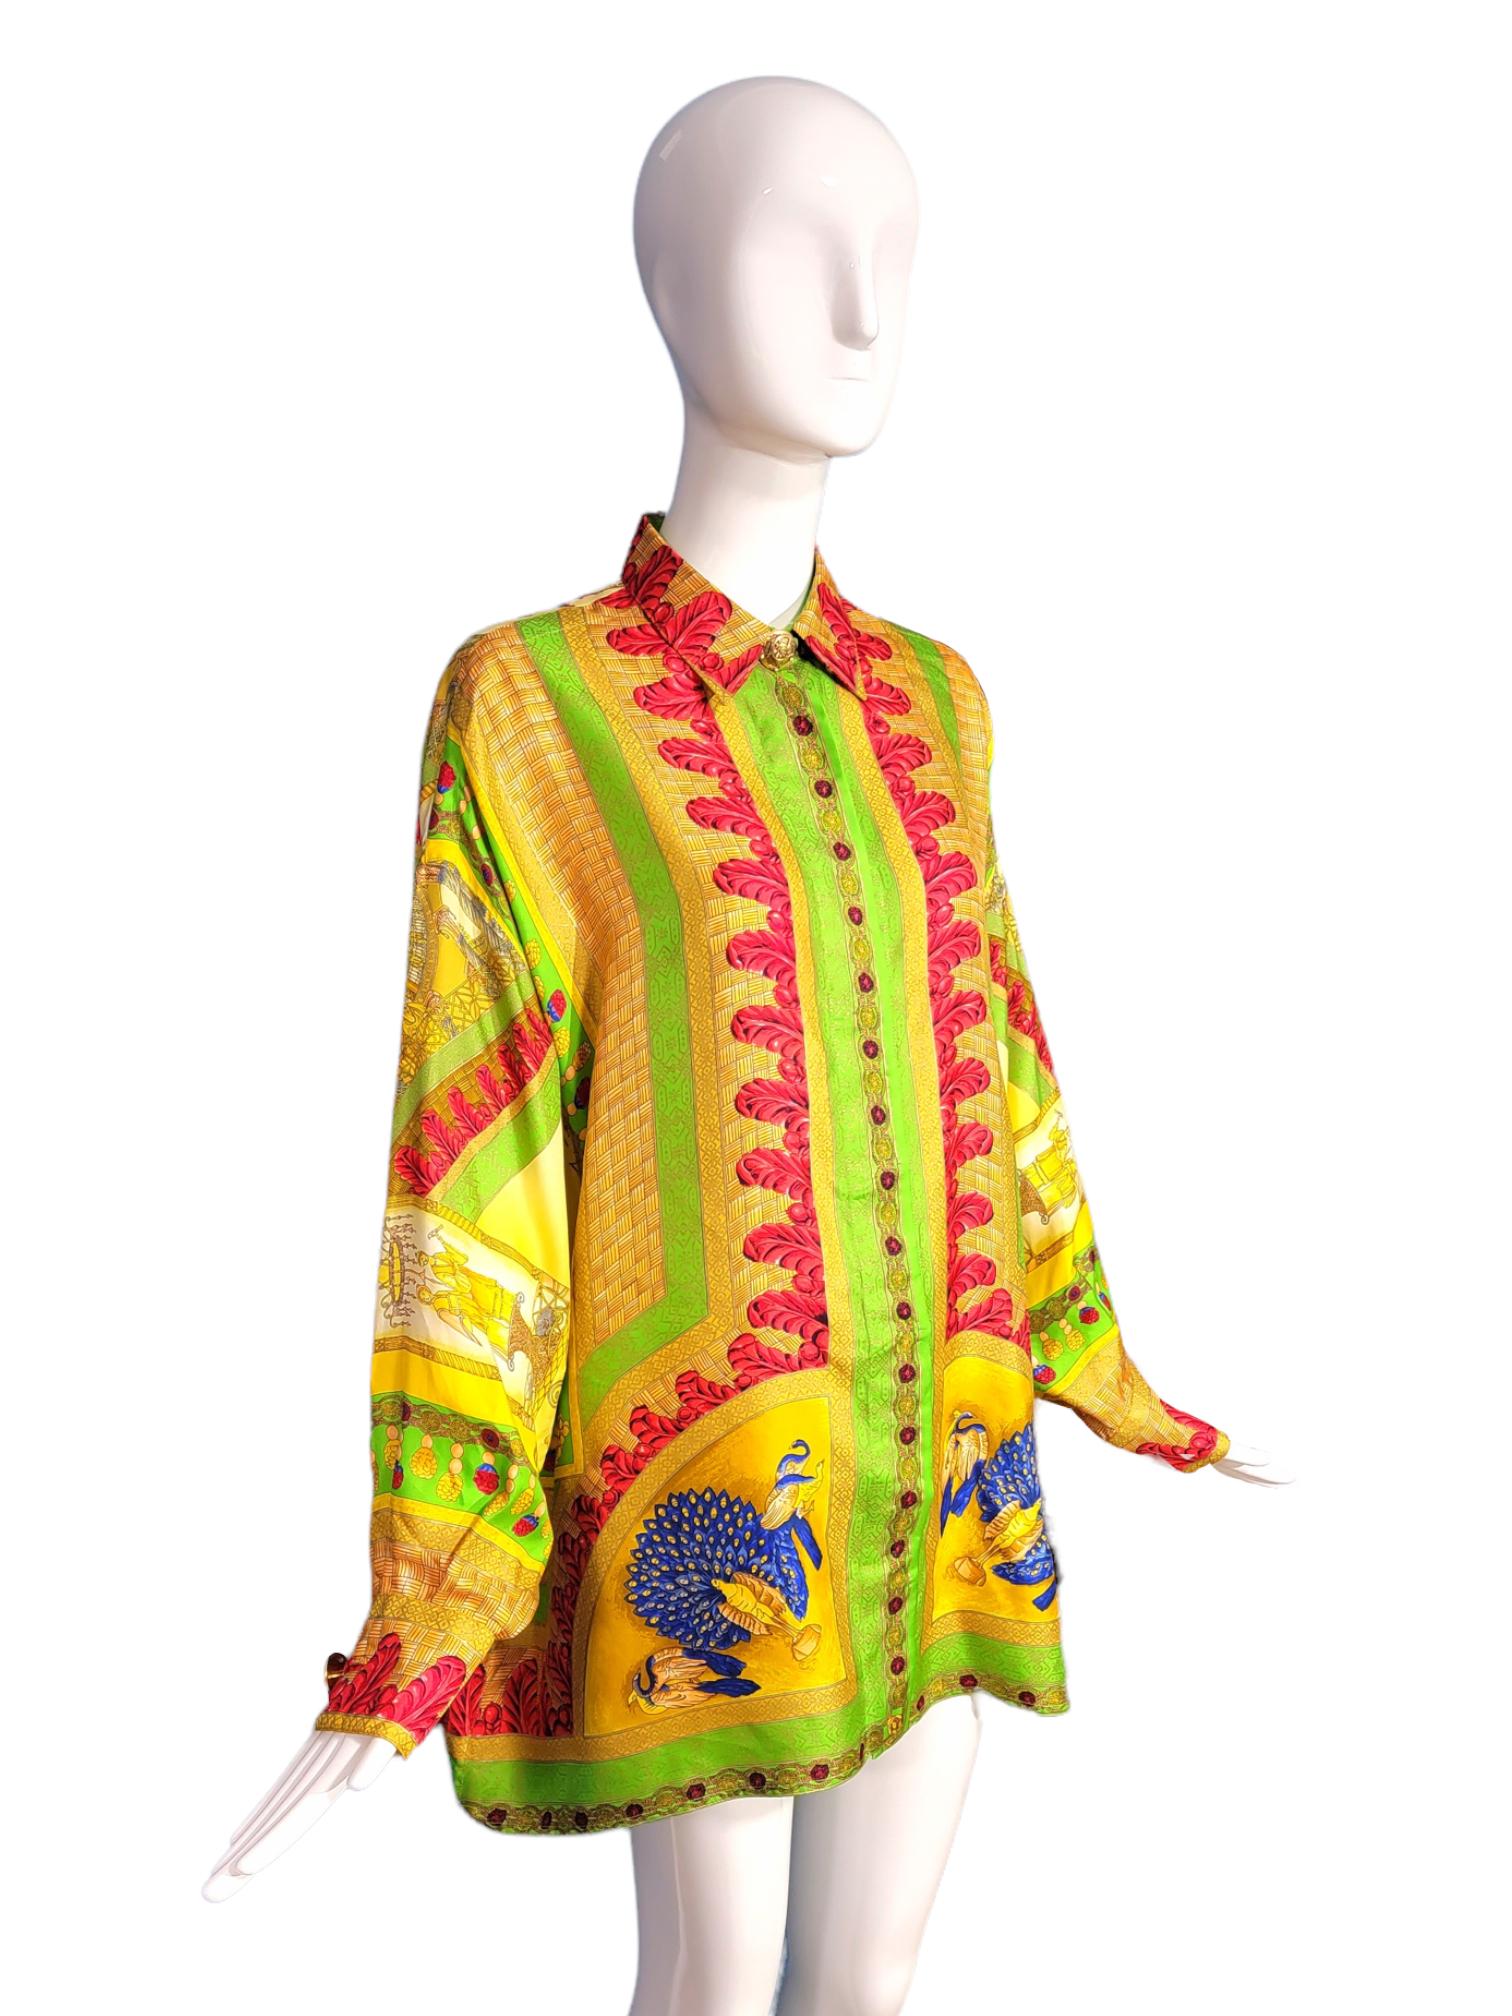 Gianni Versace Marco Polo Silk Shirt Chinese Emperor Peacocks 1992  4